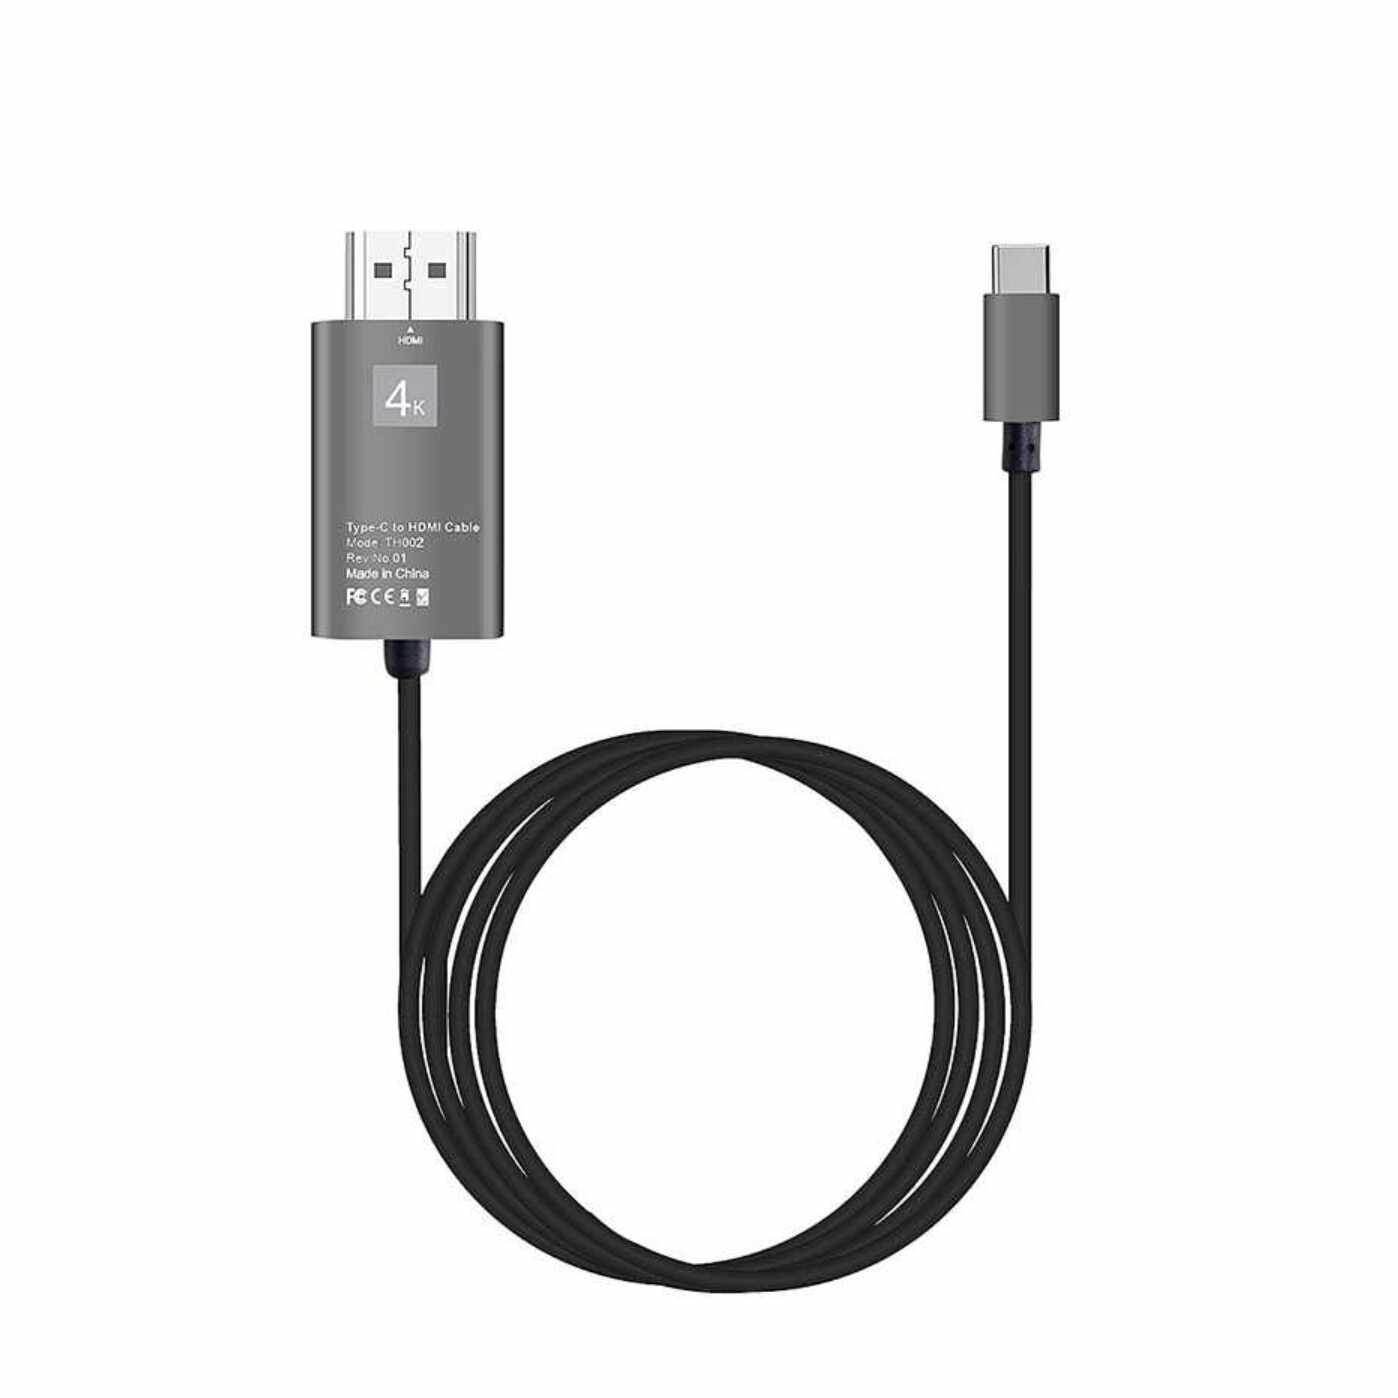 Cablu USB 3.1 Type C la HDMI 4K - Adaptor HUB de tip C pentru video HDMI 2 metri pentru Samsung Xiaomi si dispozitivele cu mufa Tip C, Negru, BBL666